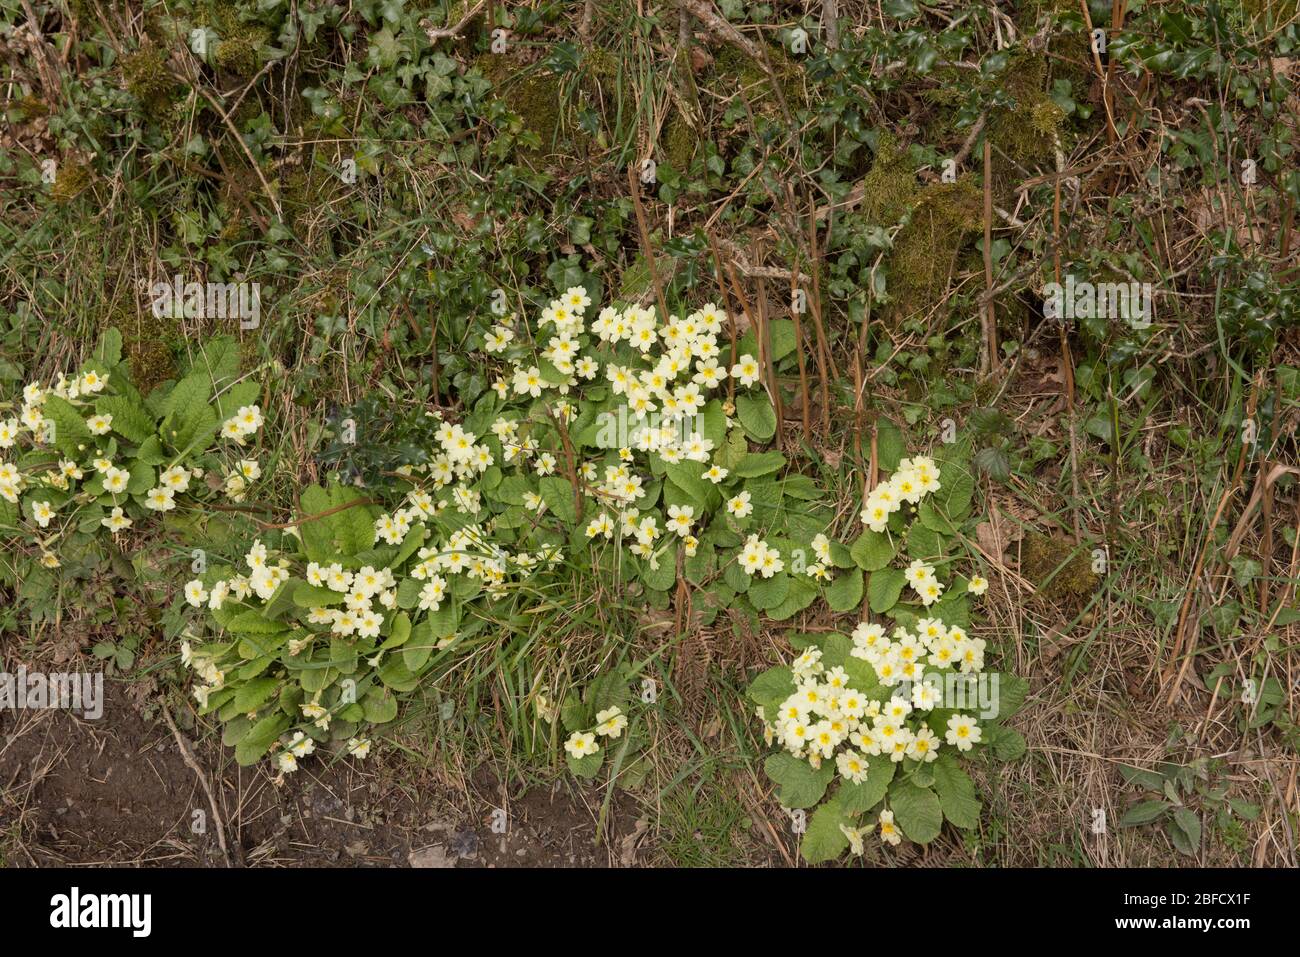 Spring Flowering Wild Primrose Plant (Primula vulgaris) on a Grassy Roadside Verge in Rural Devon, England, UK Stock Photo